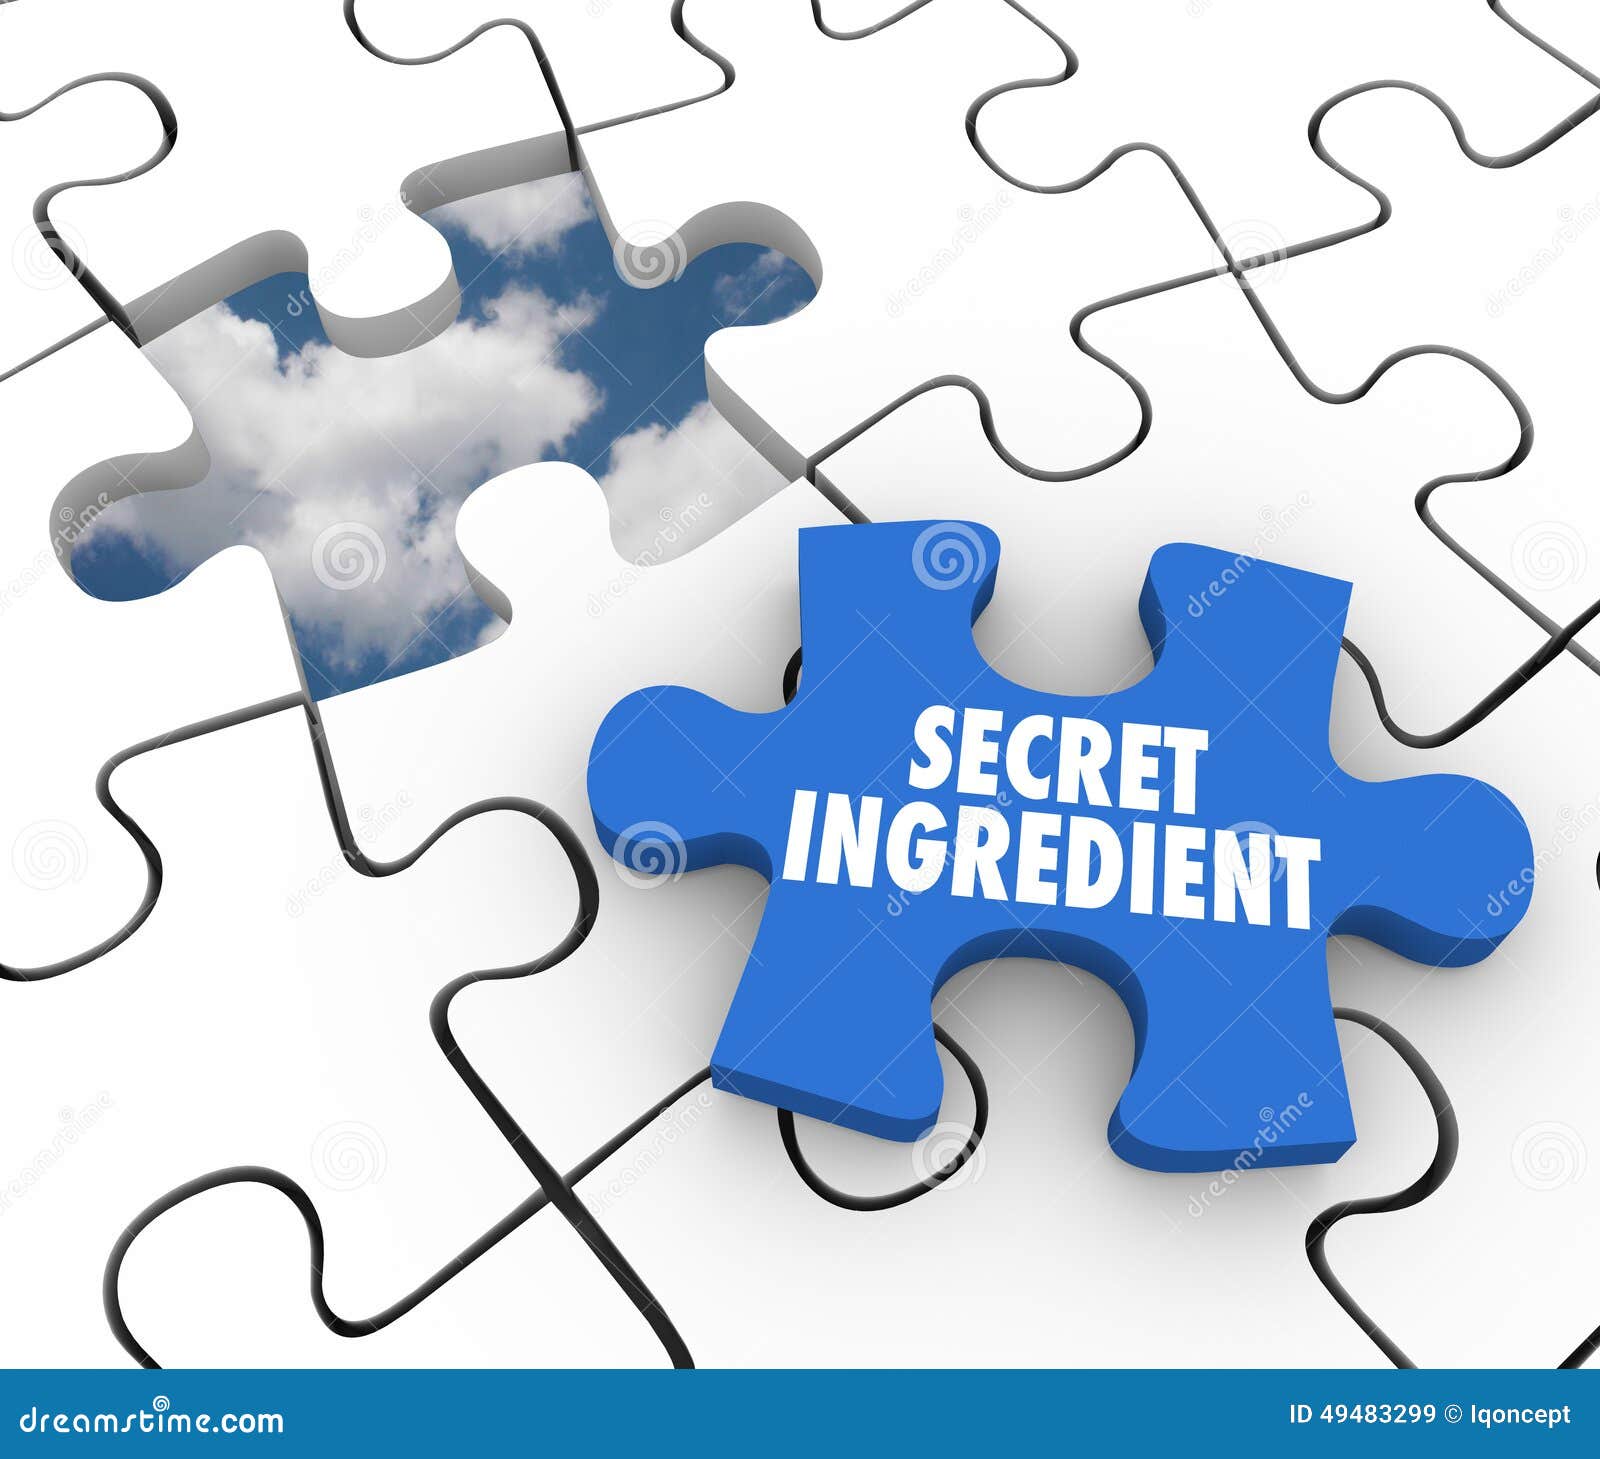 secret ingredient puzzle piece classified information confidential recipe